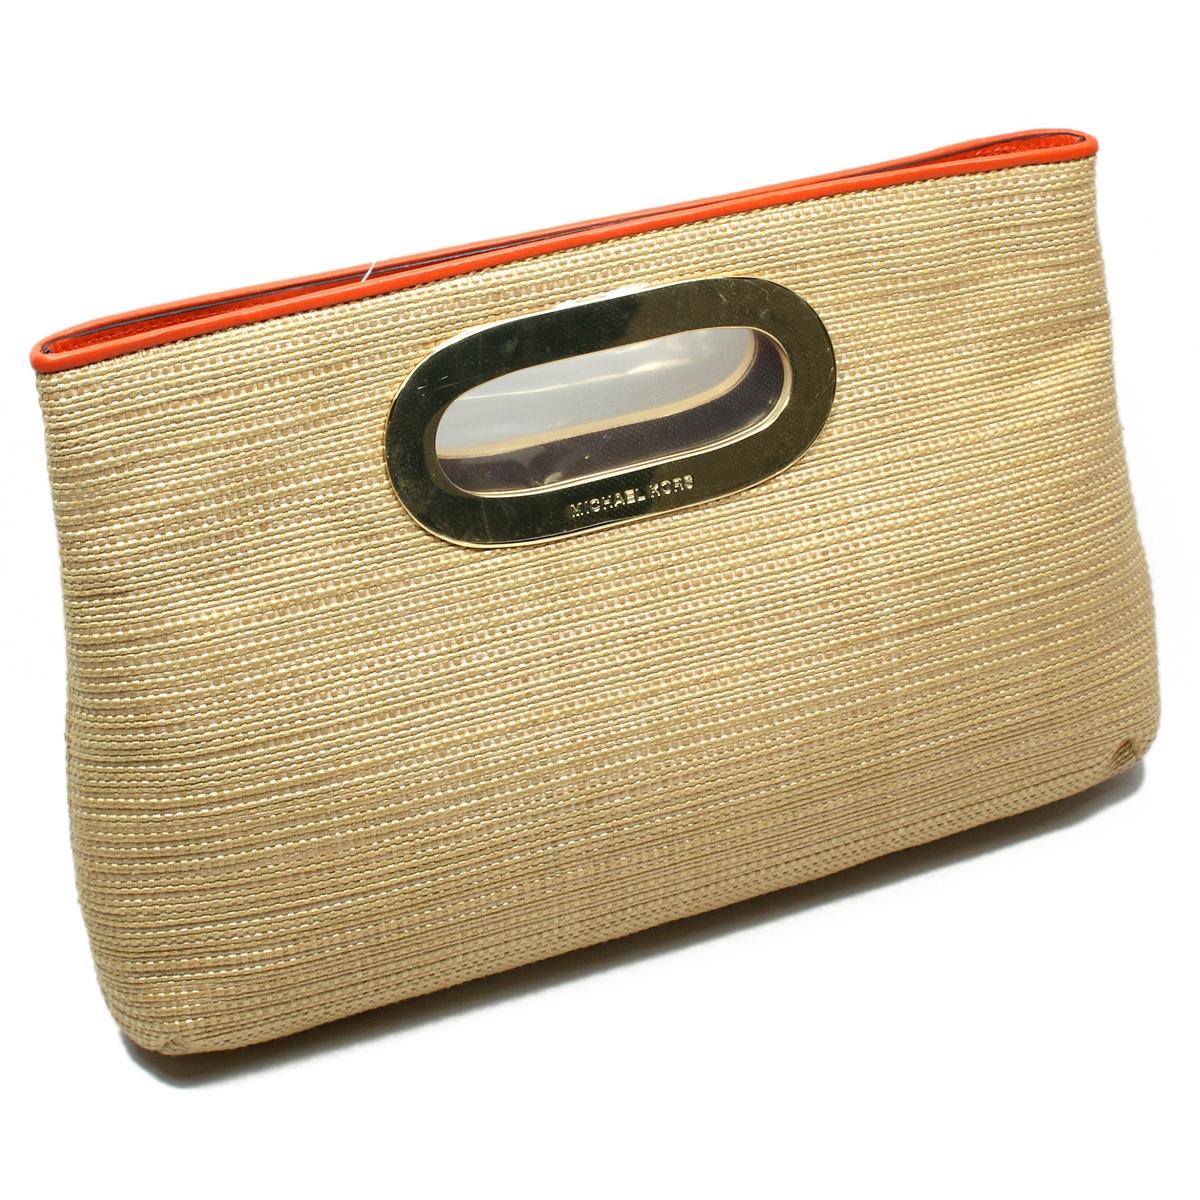 Michael Kors Berkley Natural Soft Straw Large Clutch/ Handbag #30S2GBKC3W | Michael Kors 30S2GBKC3W